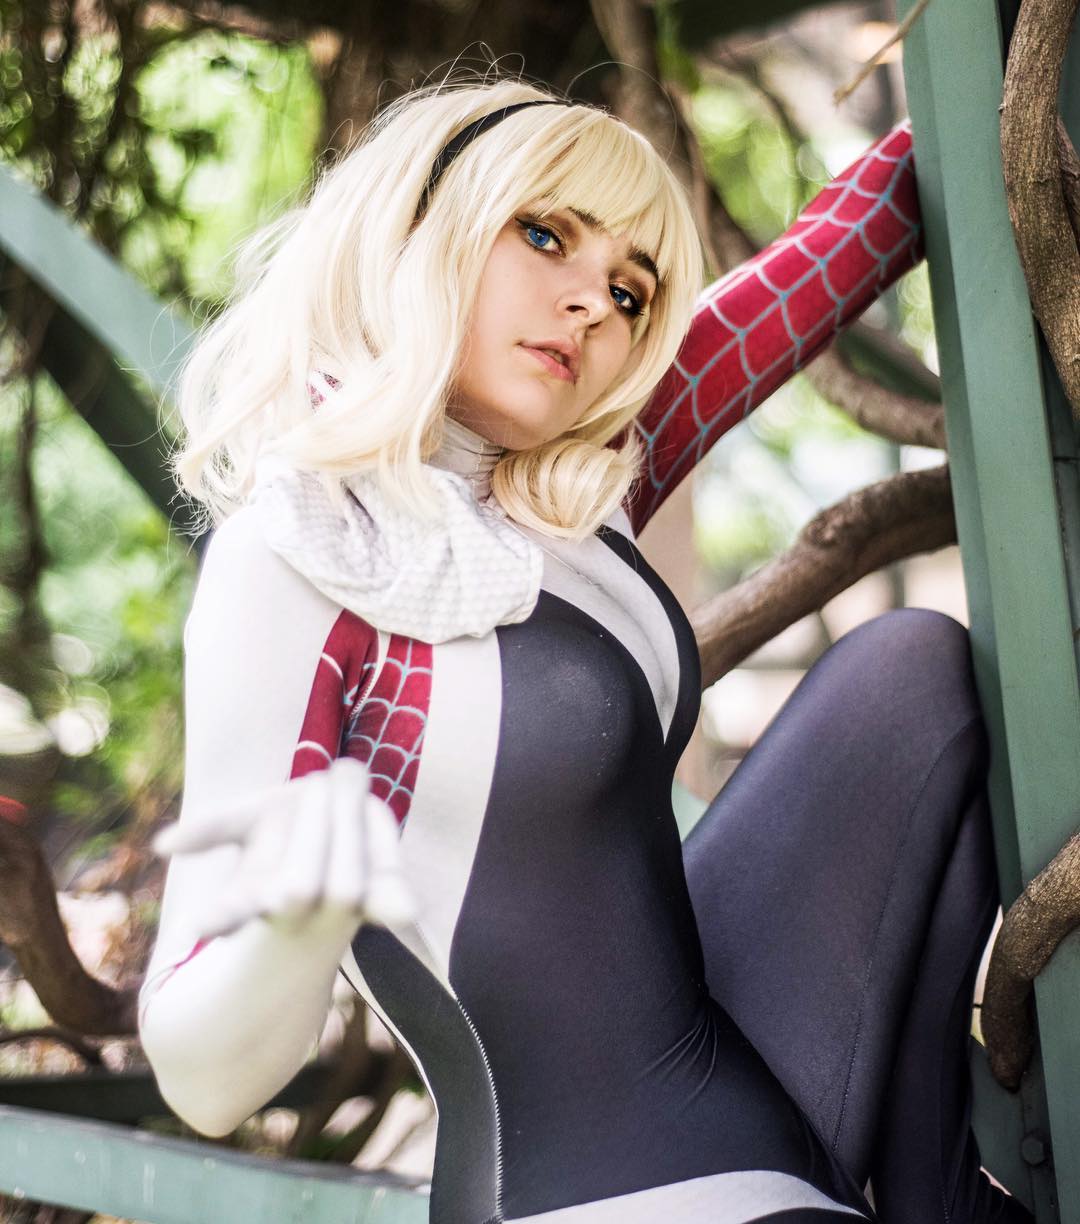 Spider-Man: Into the Spider-Verse: Spider-Gwen cosplay by OMGCosplay